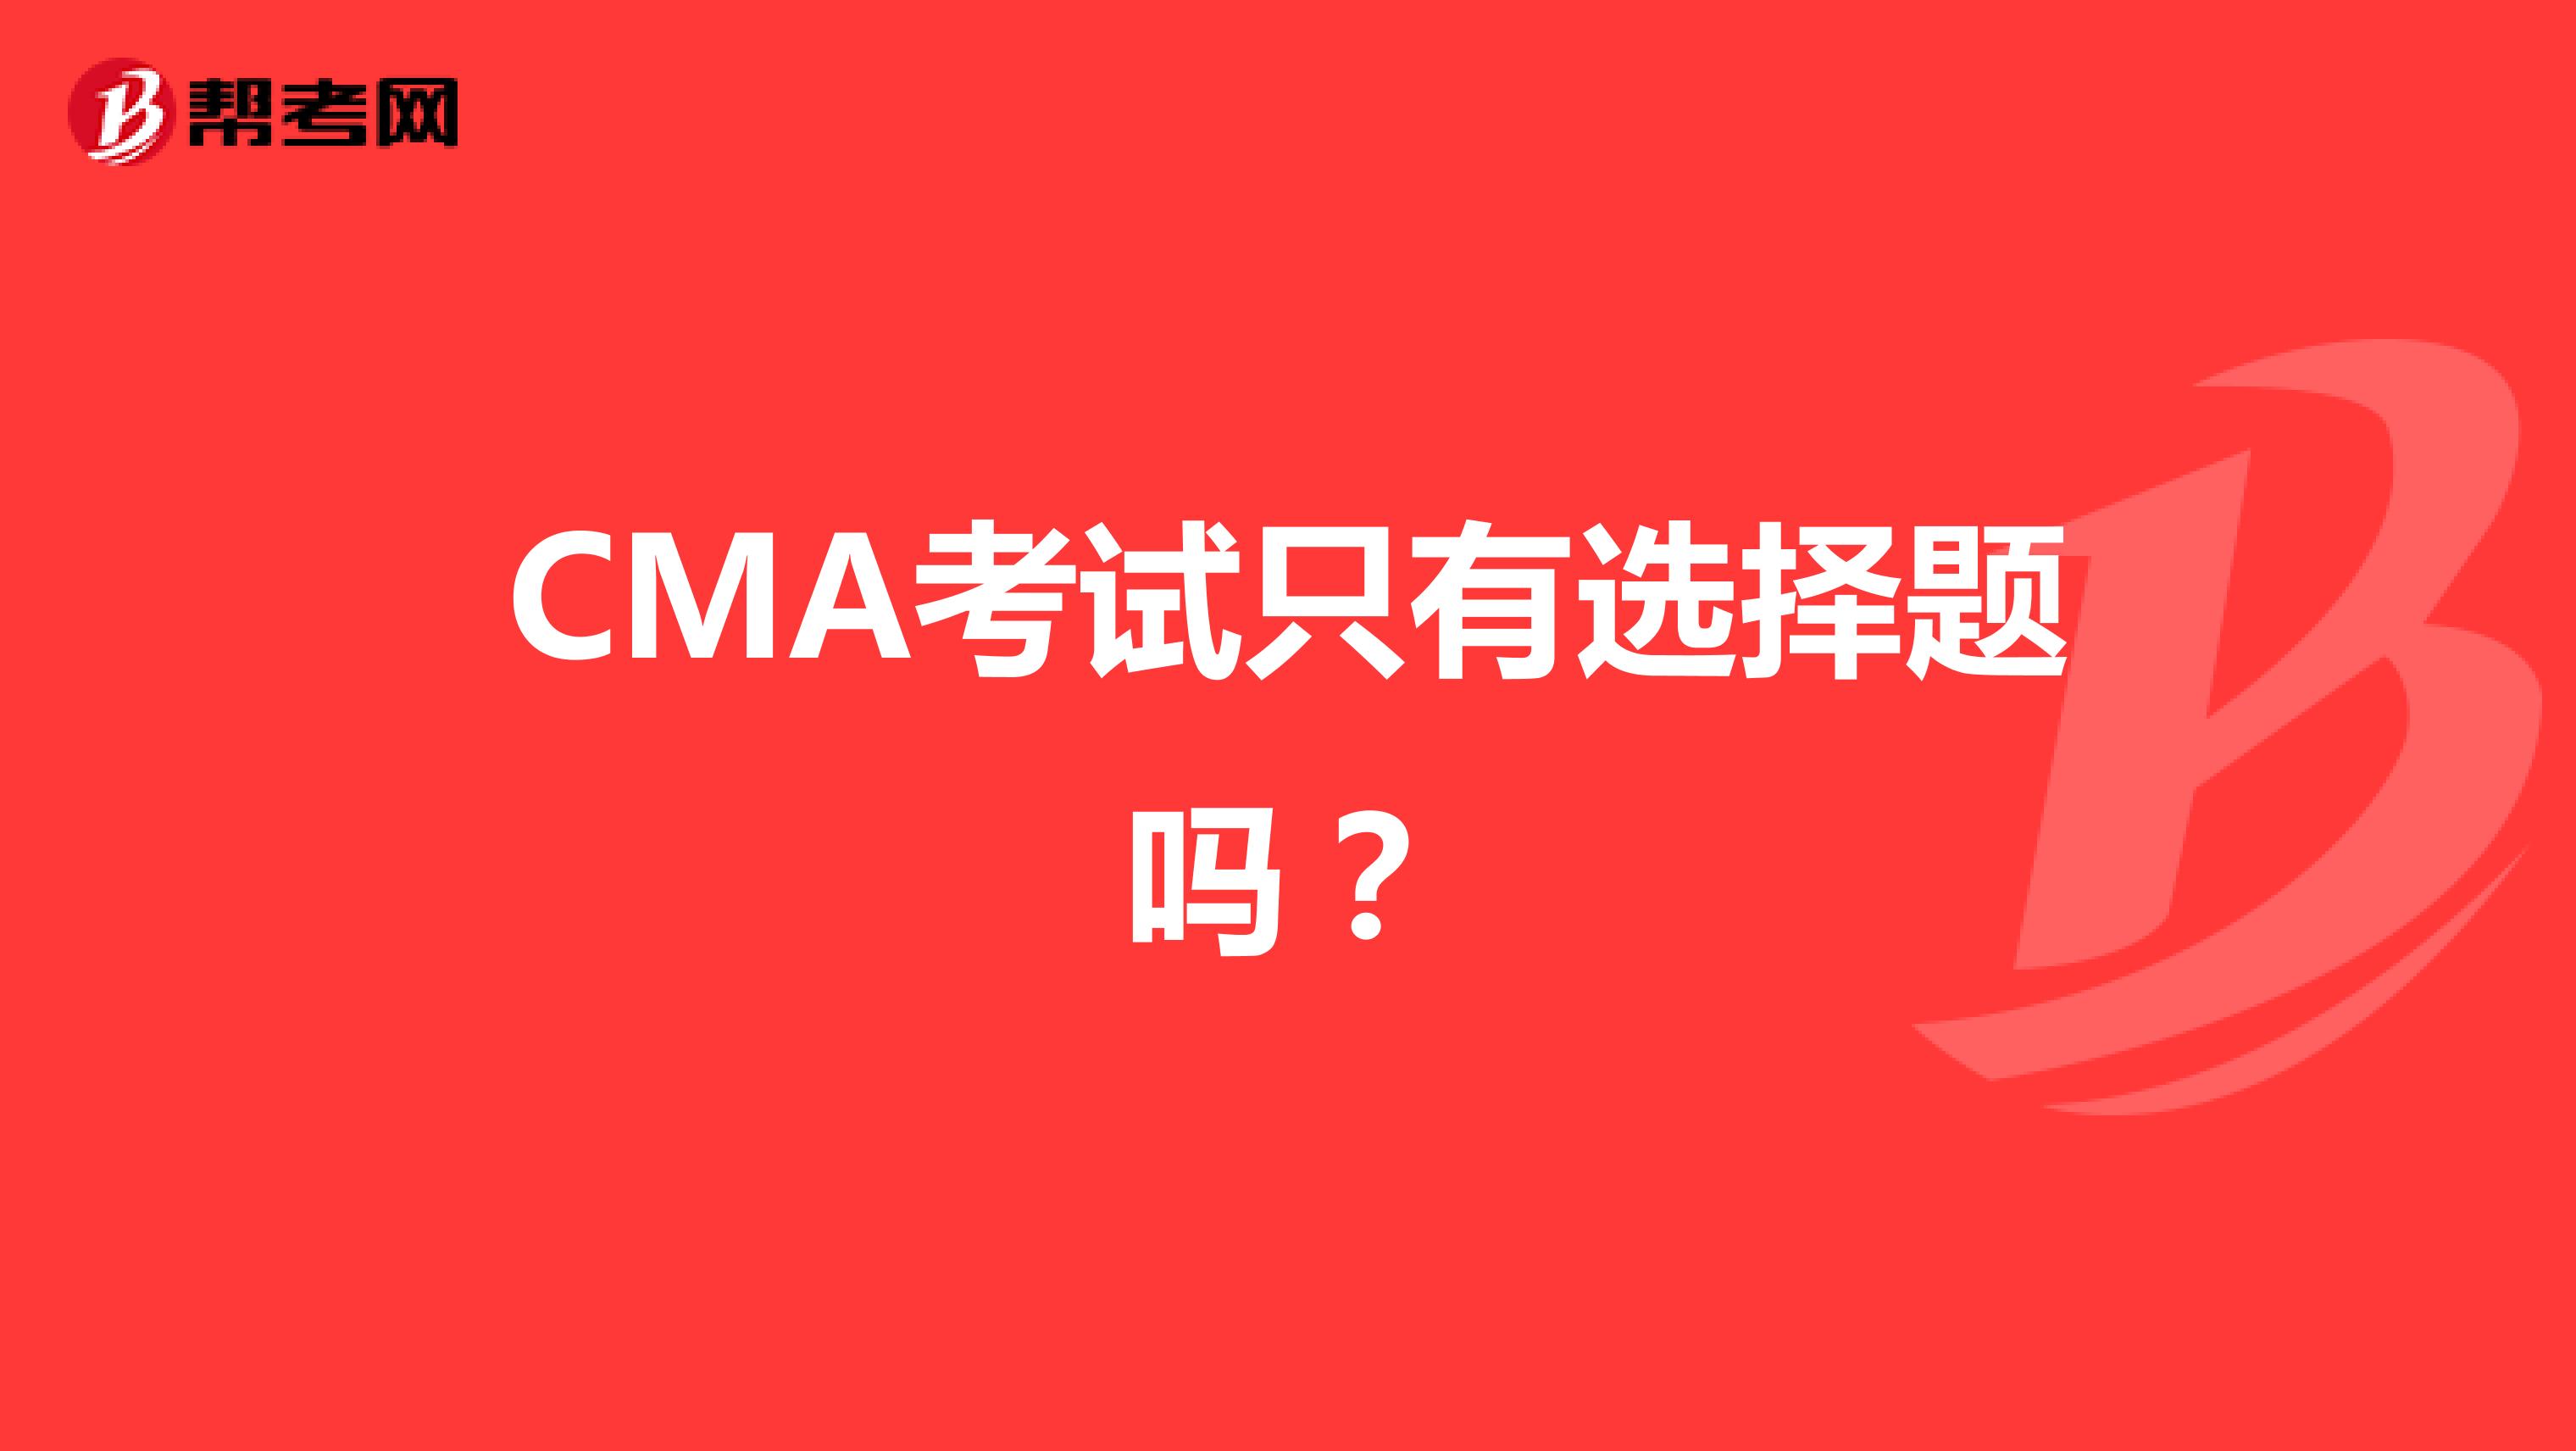 CMA考试只有选择题吗？